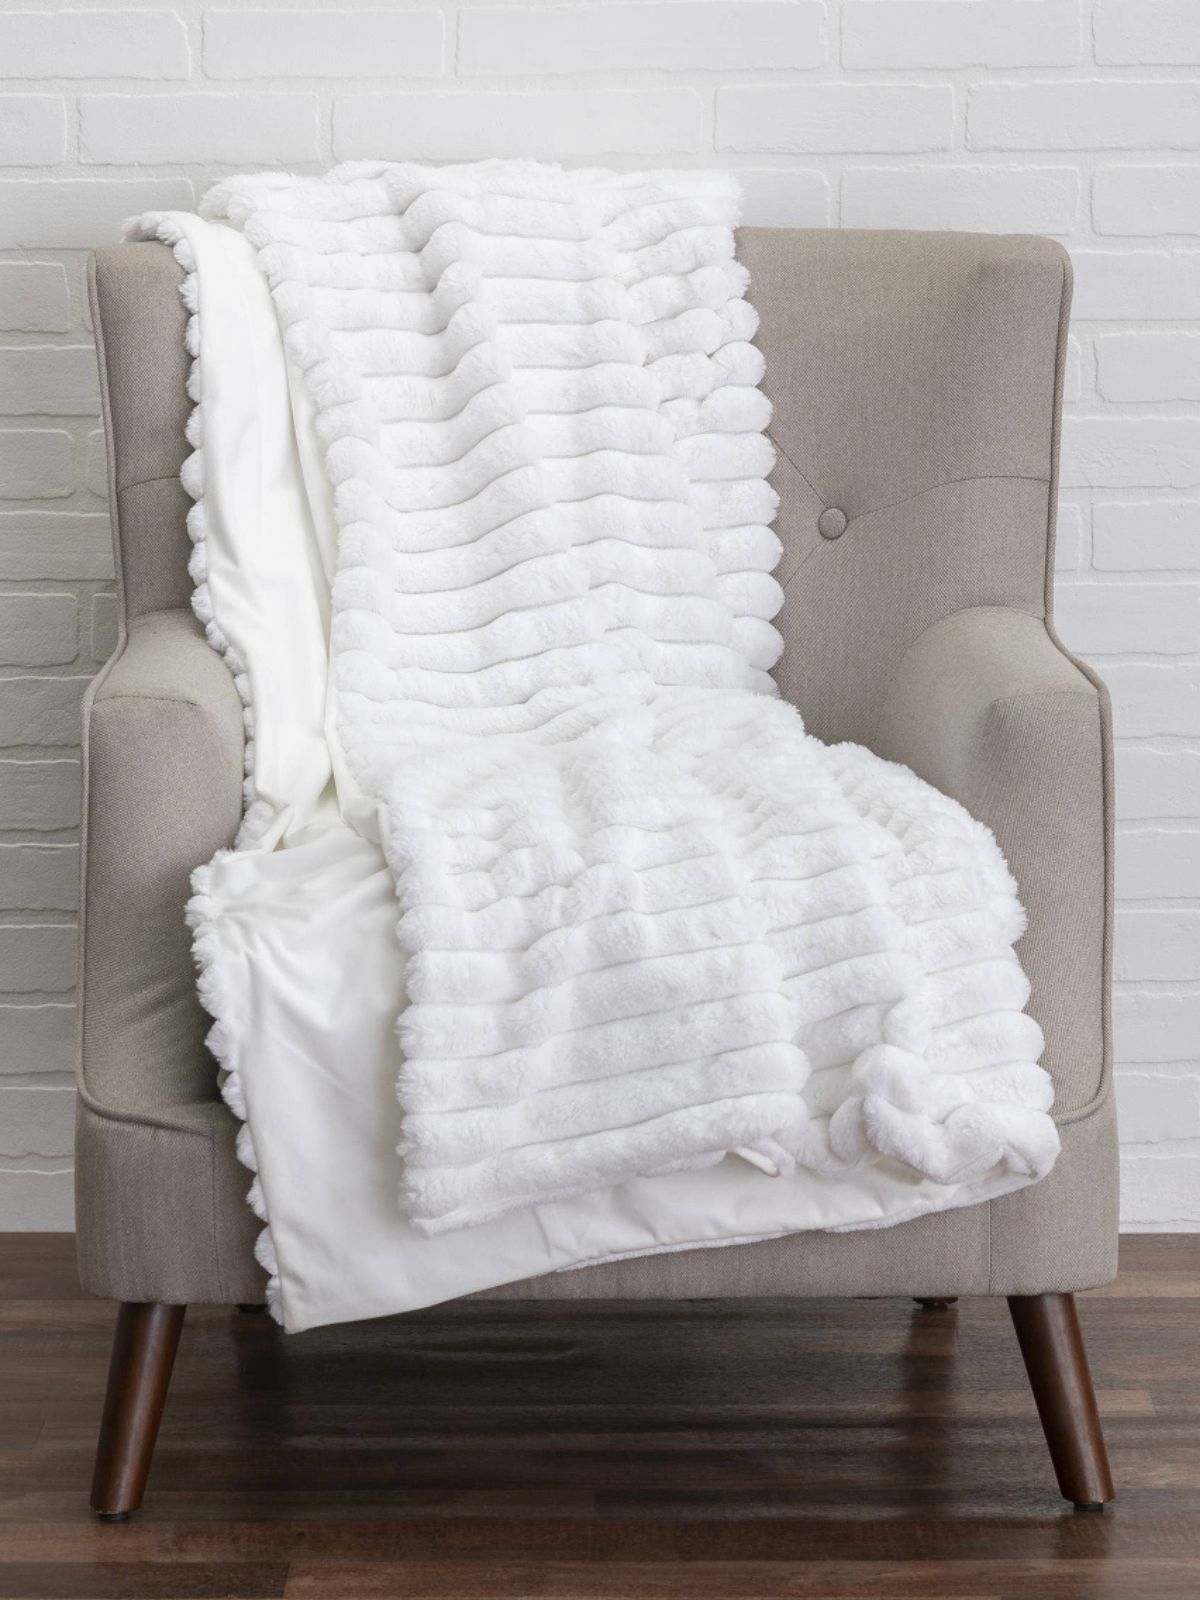 Lux White Designer Throw Blanket Sold by KYA Home Decor, 60L x 50W. 